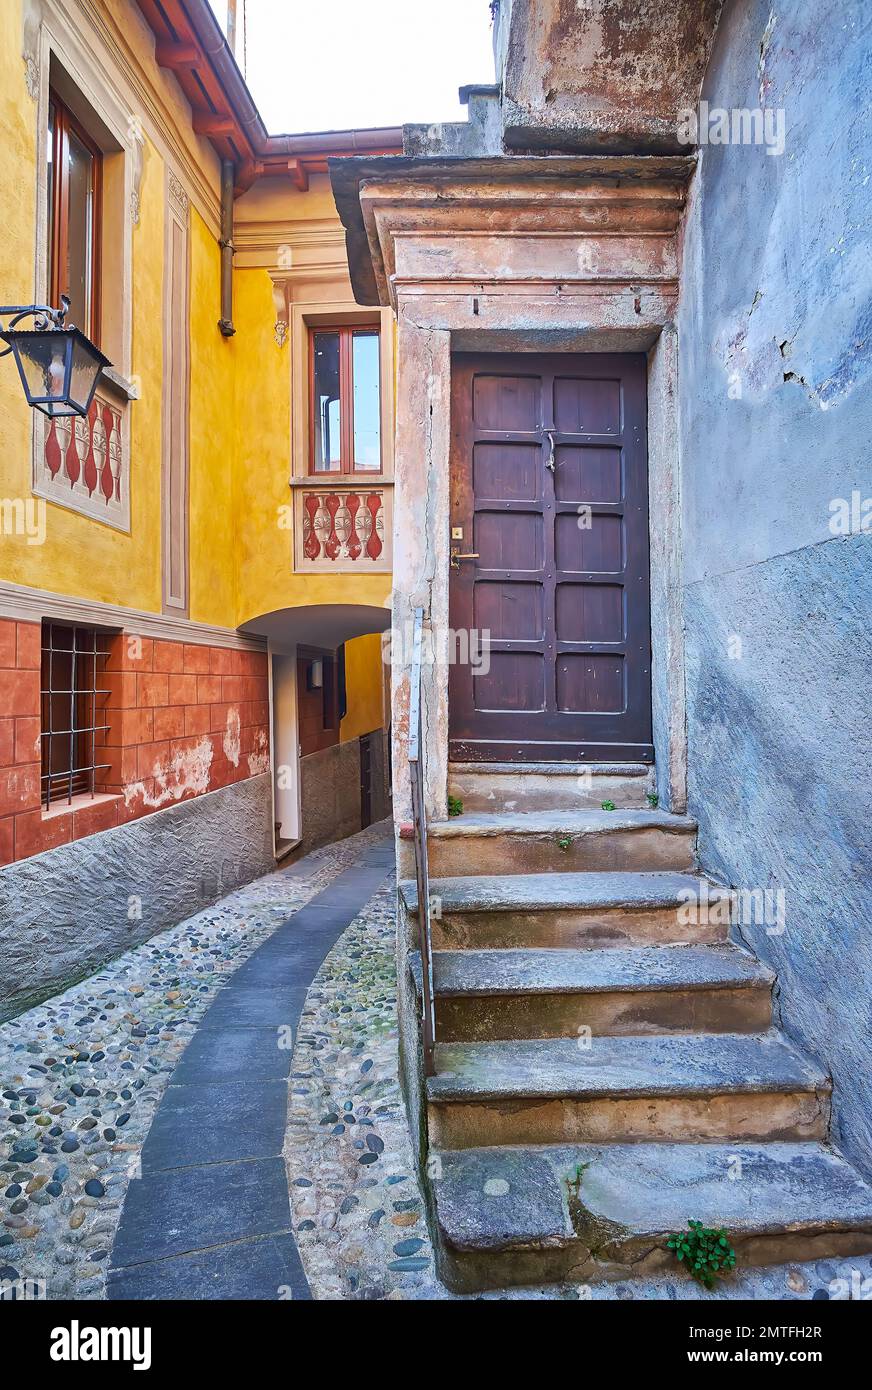 La calle estrecha con casas antiguas, decoradas con frescos, Ronco sopra Ascona, Ticino, Suiza Foto de stock